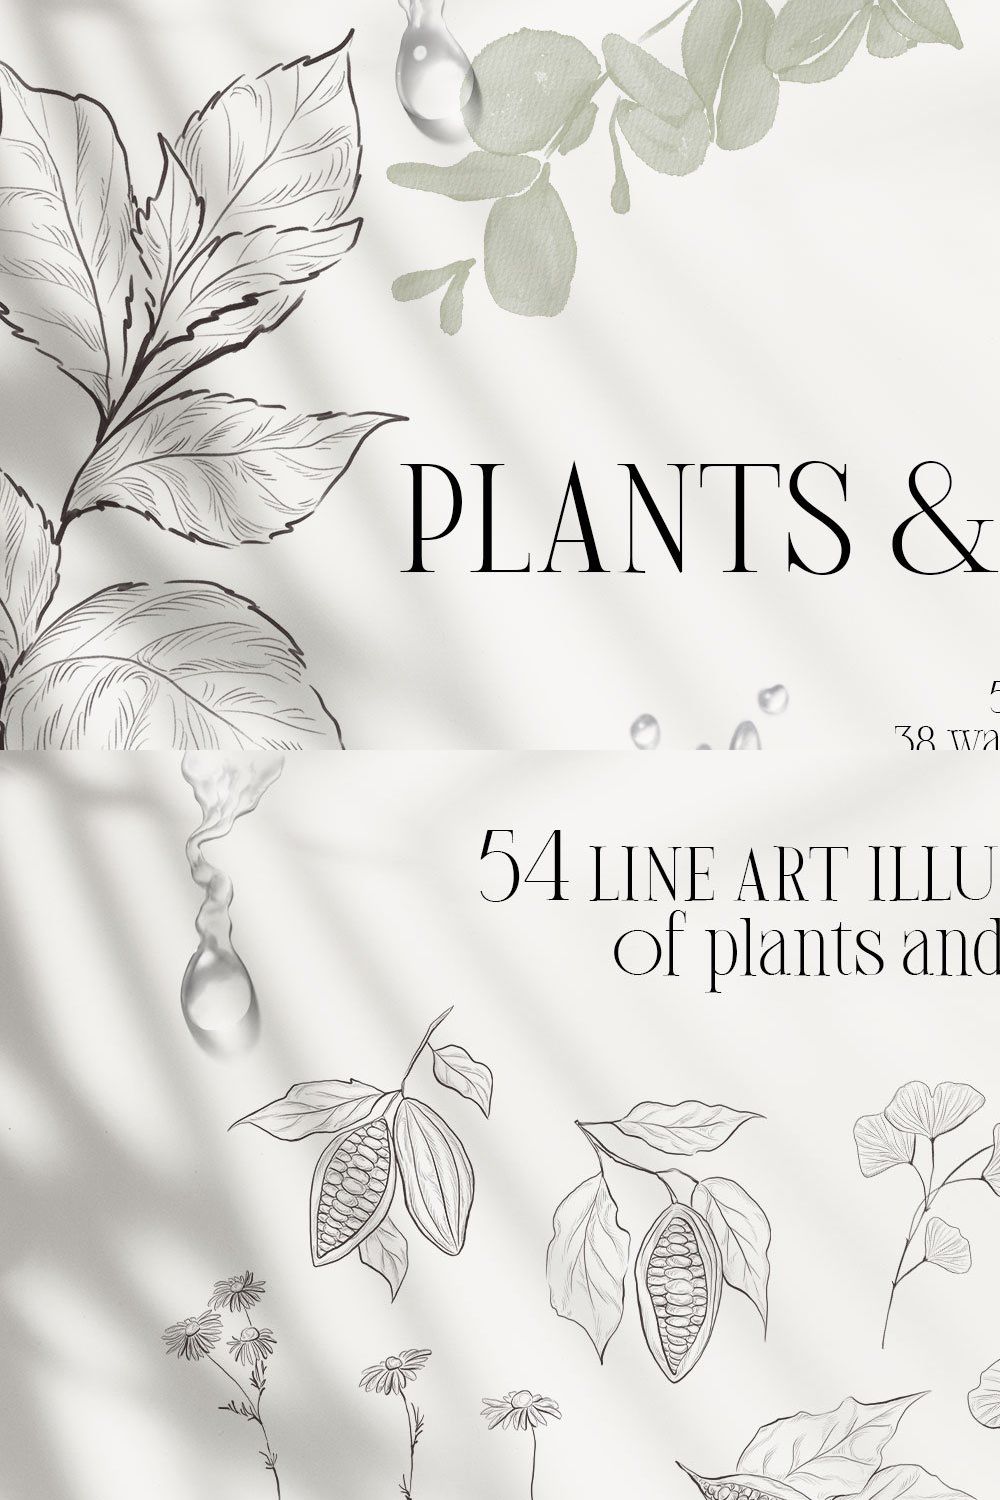 PLANTS & HERBS illustrations set pinterest preview image.